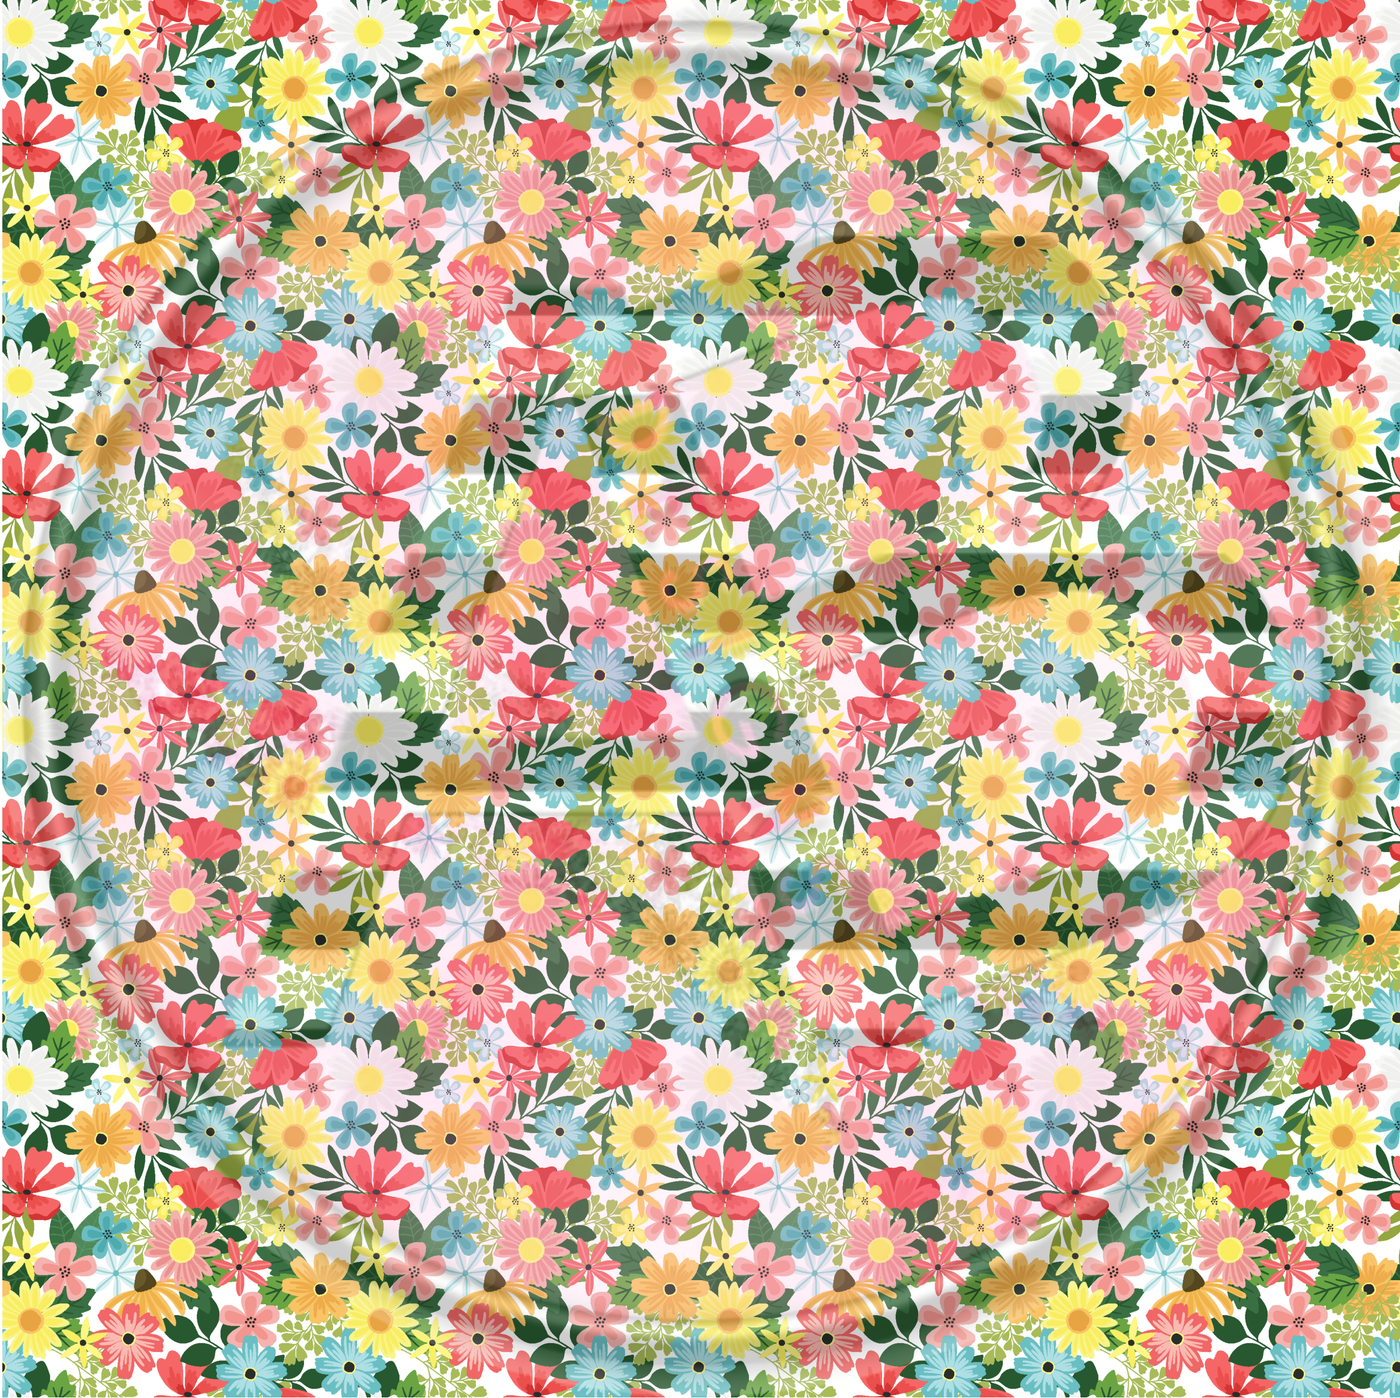 Adhesive Patterned Vinyl - Summer Floral 56